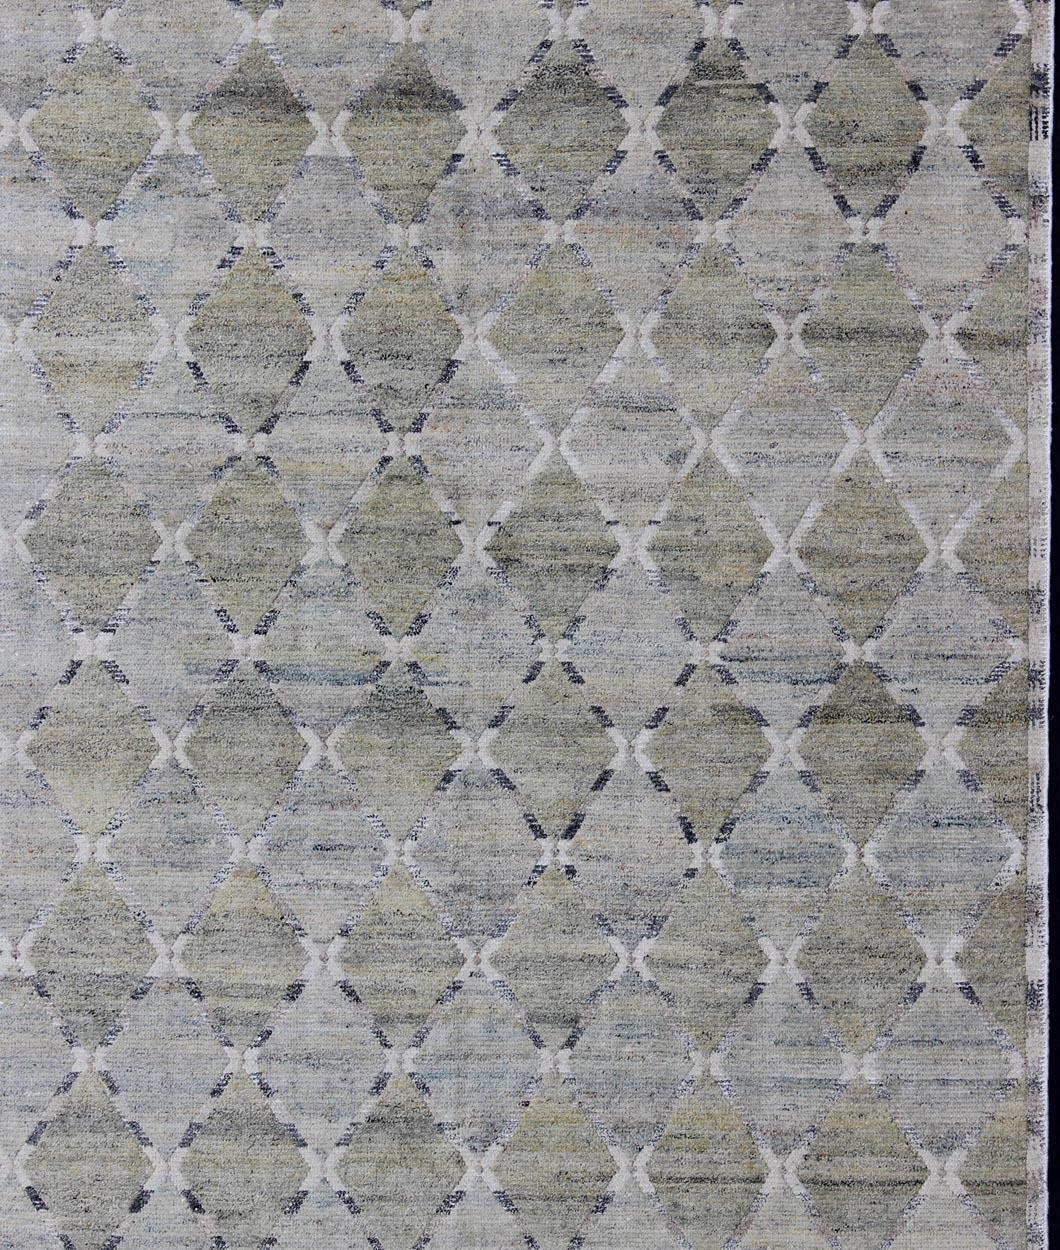 Indian Geometric Latticework Pattern Modern Scandinavian Piled Rug in Shades of Gray For Sale